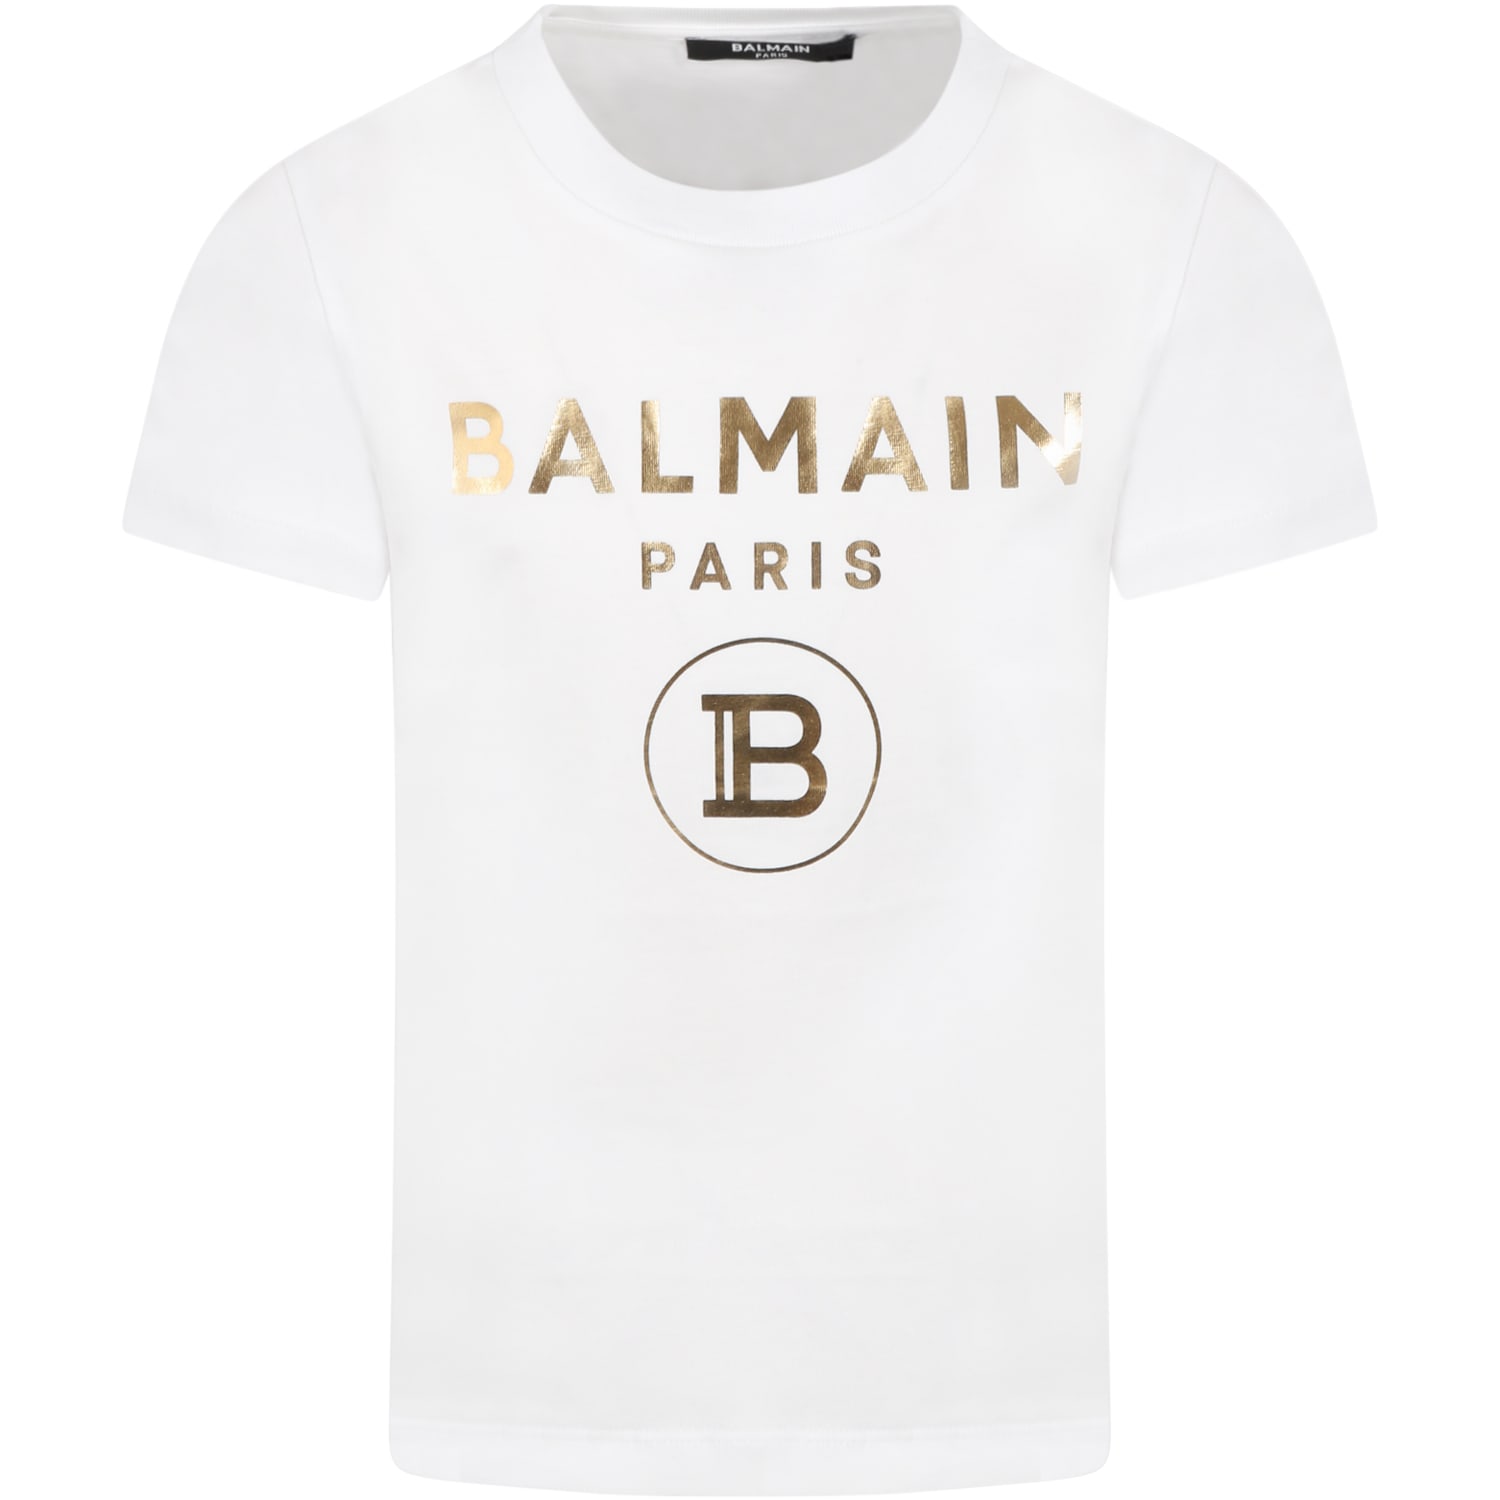 Balmain White T-shirt For Kids With Gold Logos